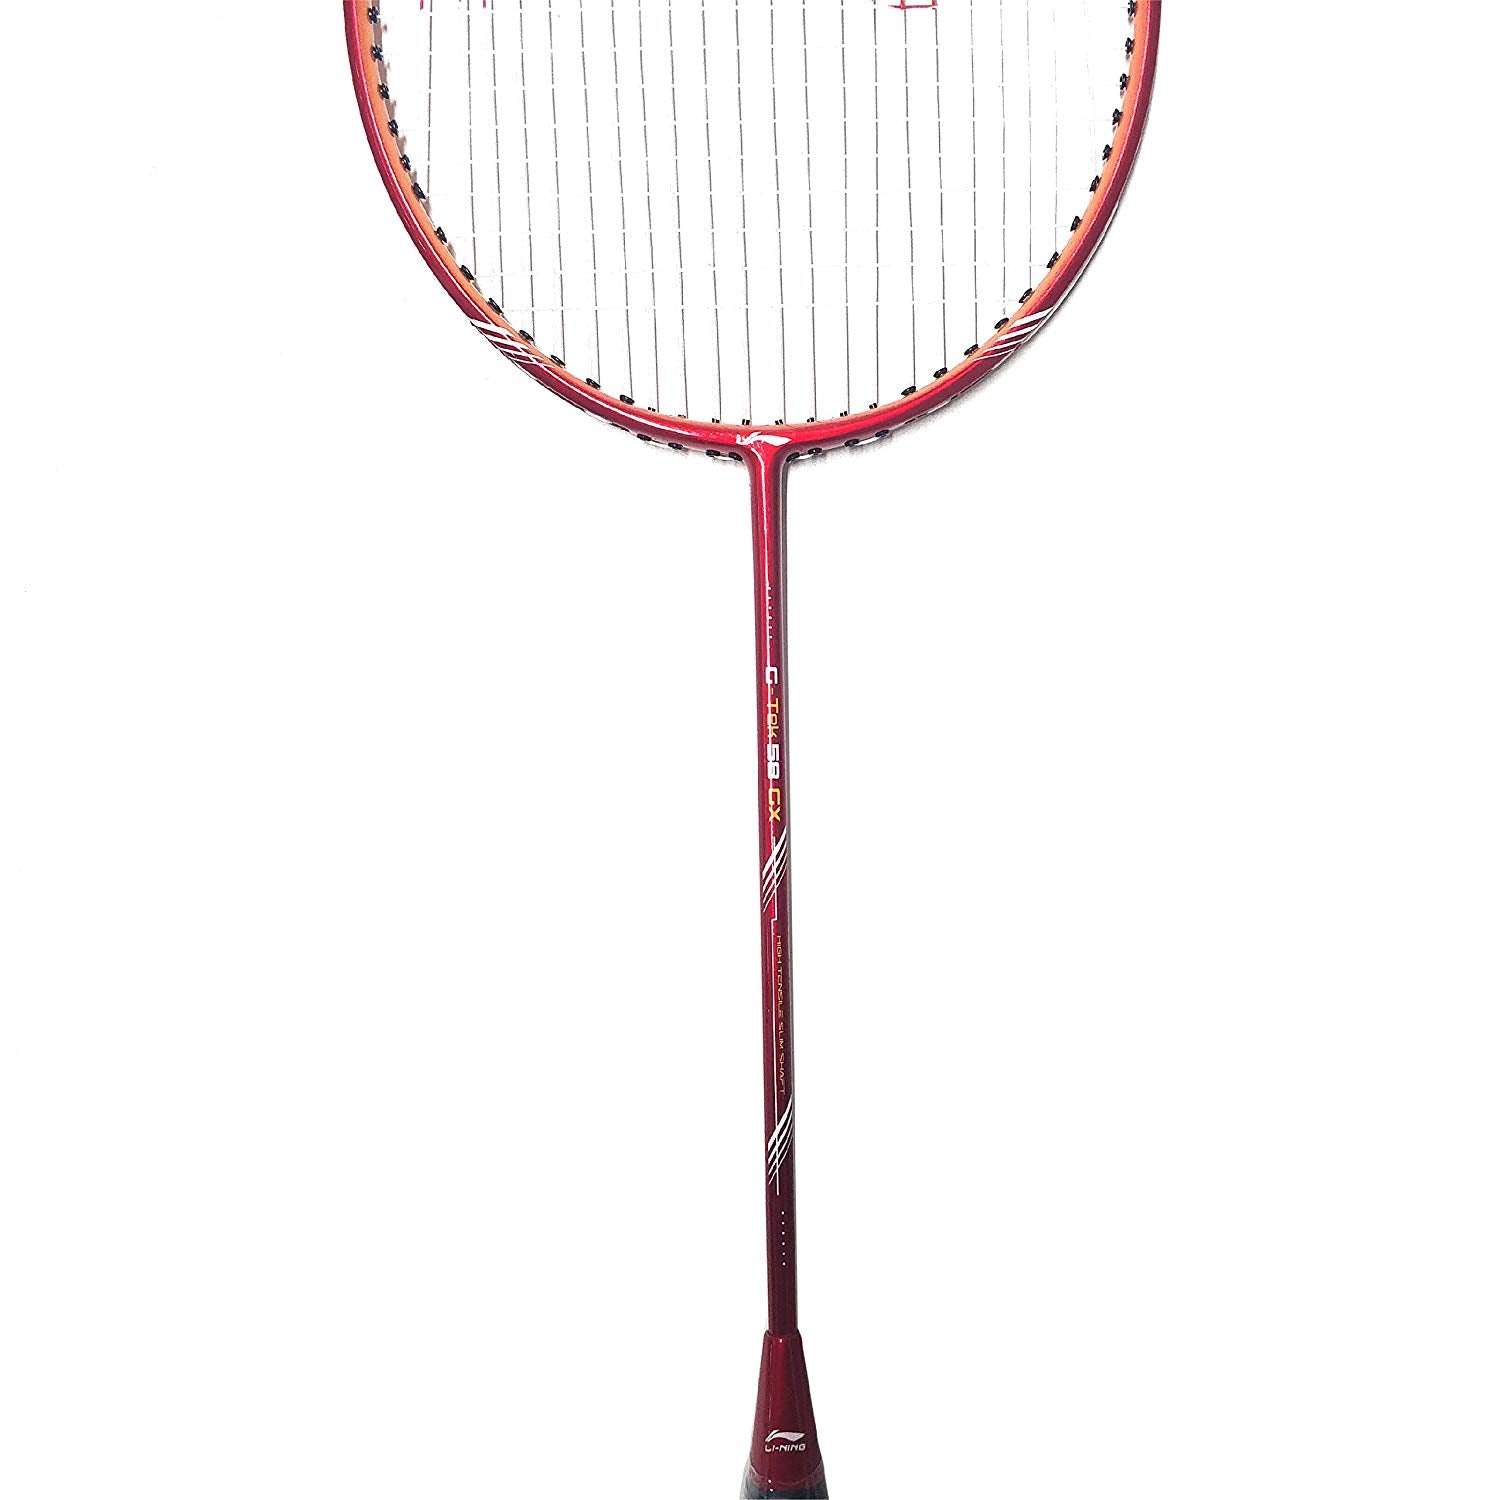 Li-Ning G-TEK 58 GX Graphite Strung Badminton Racquets (Red/Amber) - Best Price online Prokicksports.com